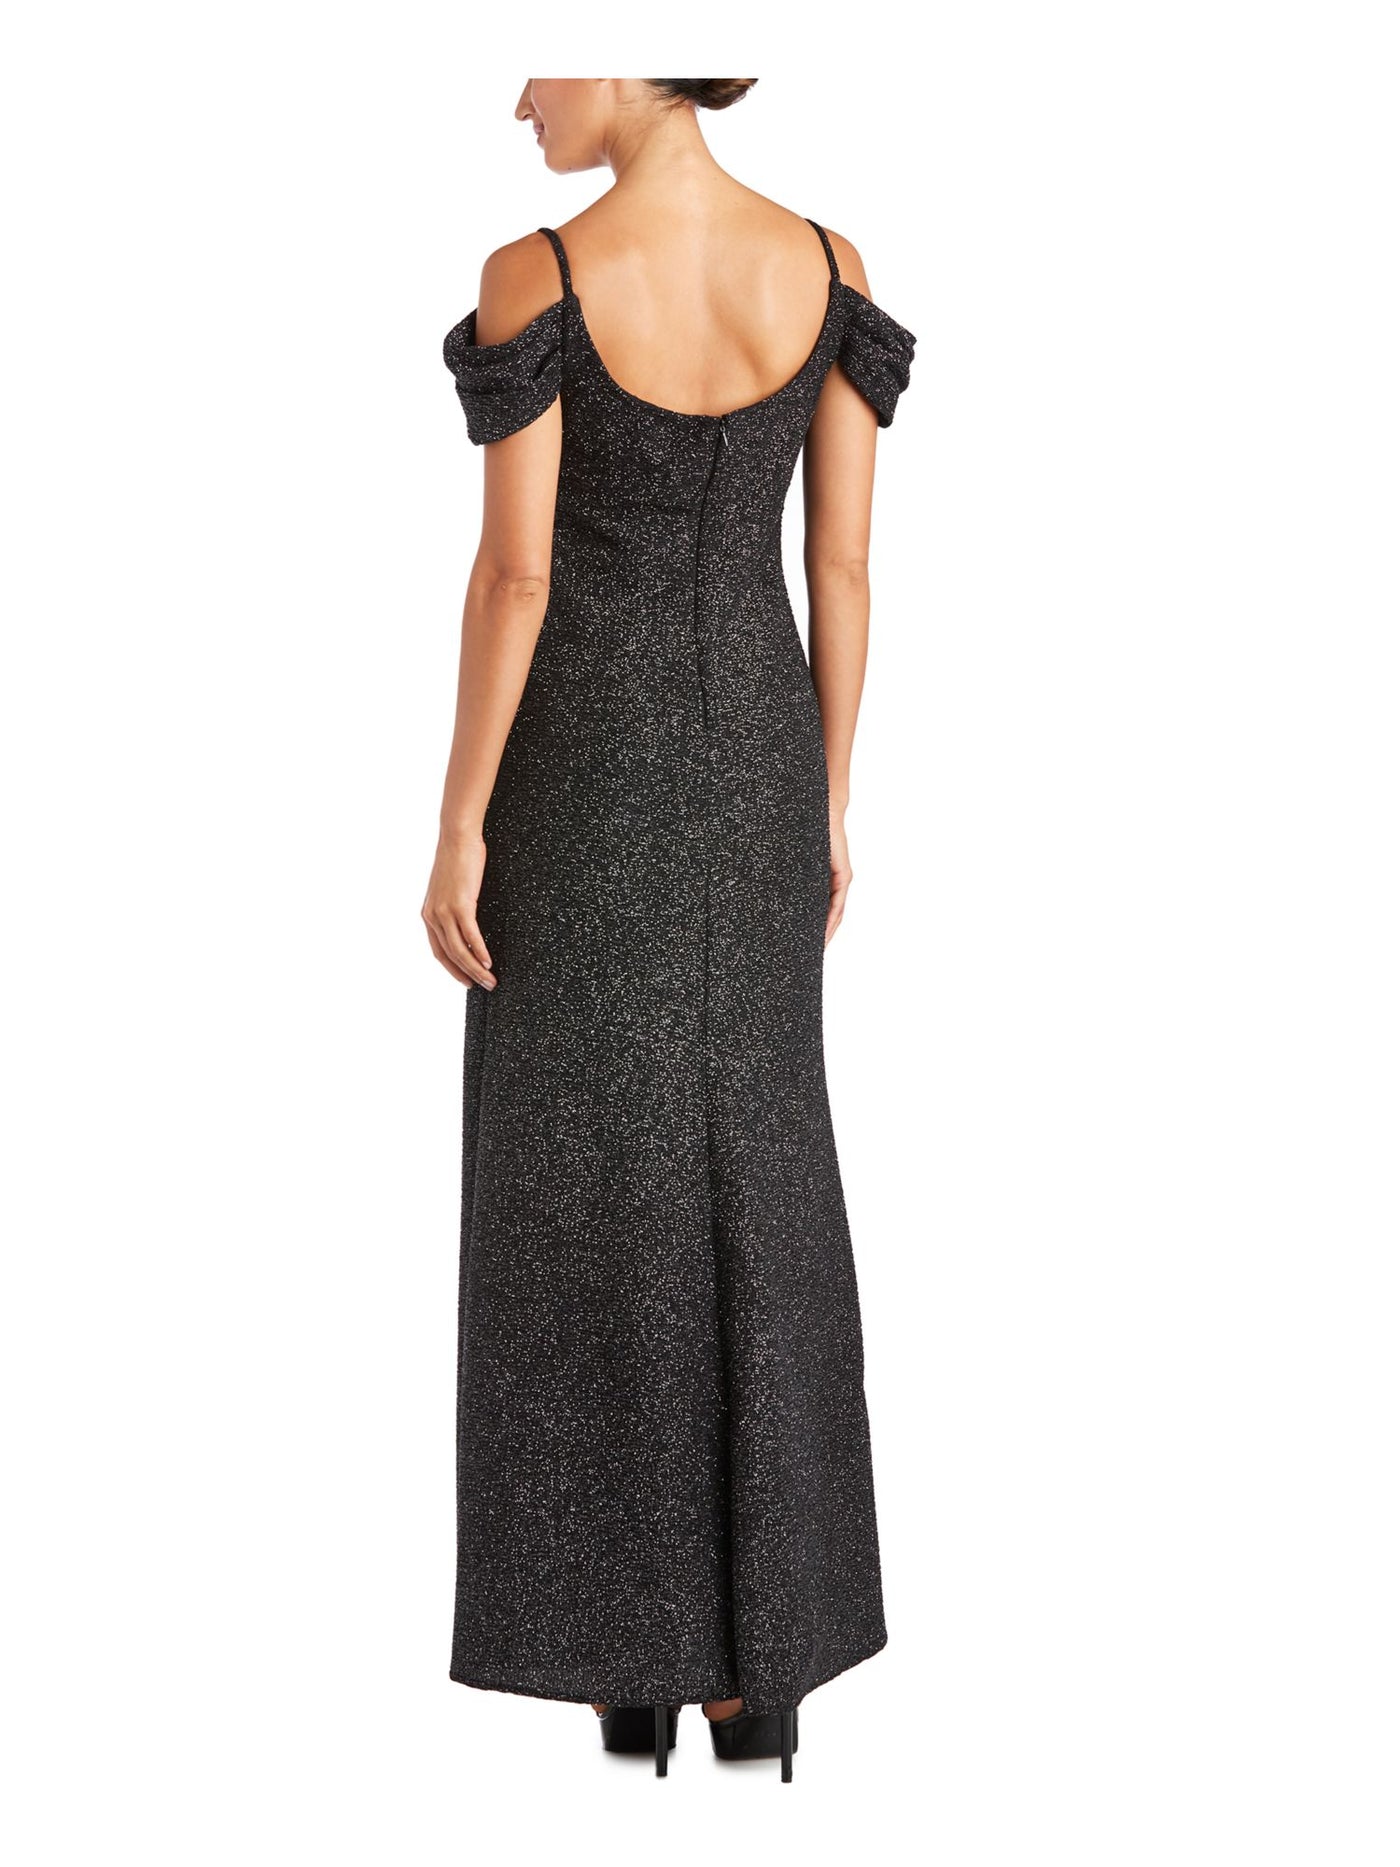 NIGHTWAY Womens Black Cold Shoulder Glitter Short Sleeve Cowl Neck Full-Length Evening Shift Dress 8